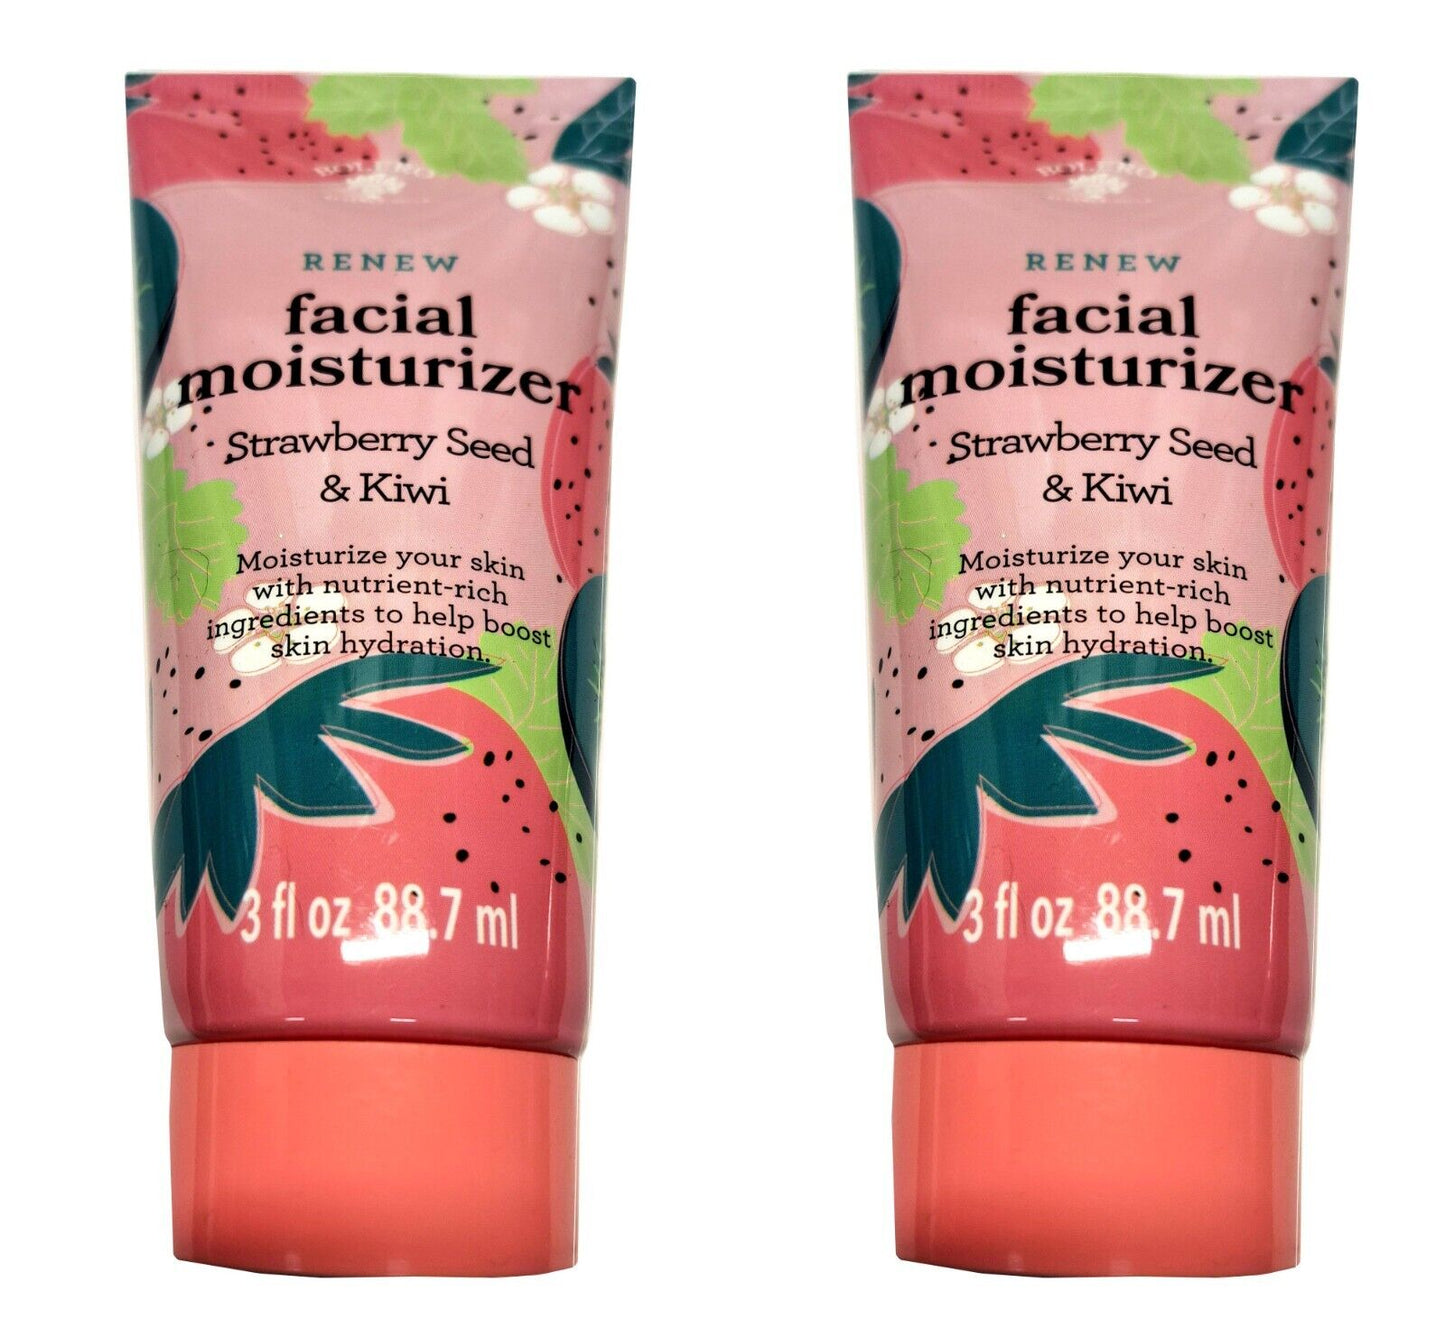 Bolero Facial Moisturizer Strawberry Seed & Kiwi 3fl oz, 88.7ml (Set of 2 Pack)